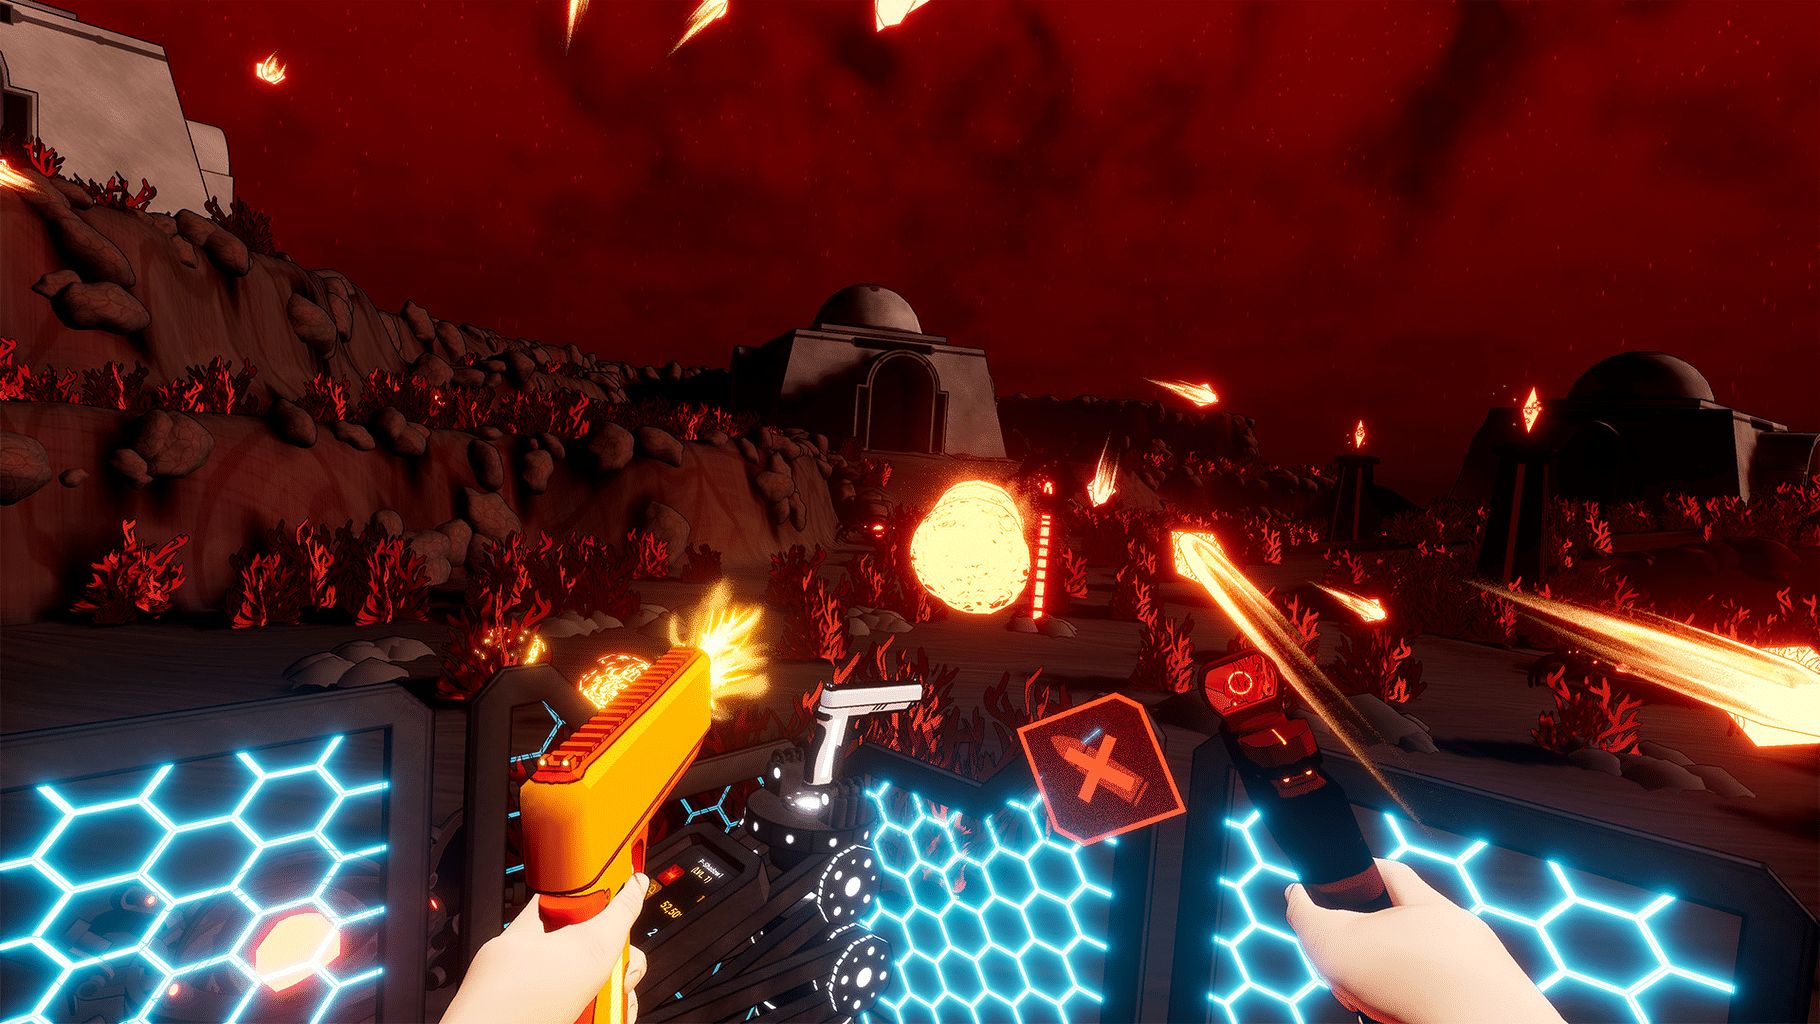 Tower of Doom screenshot